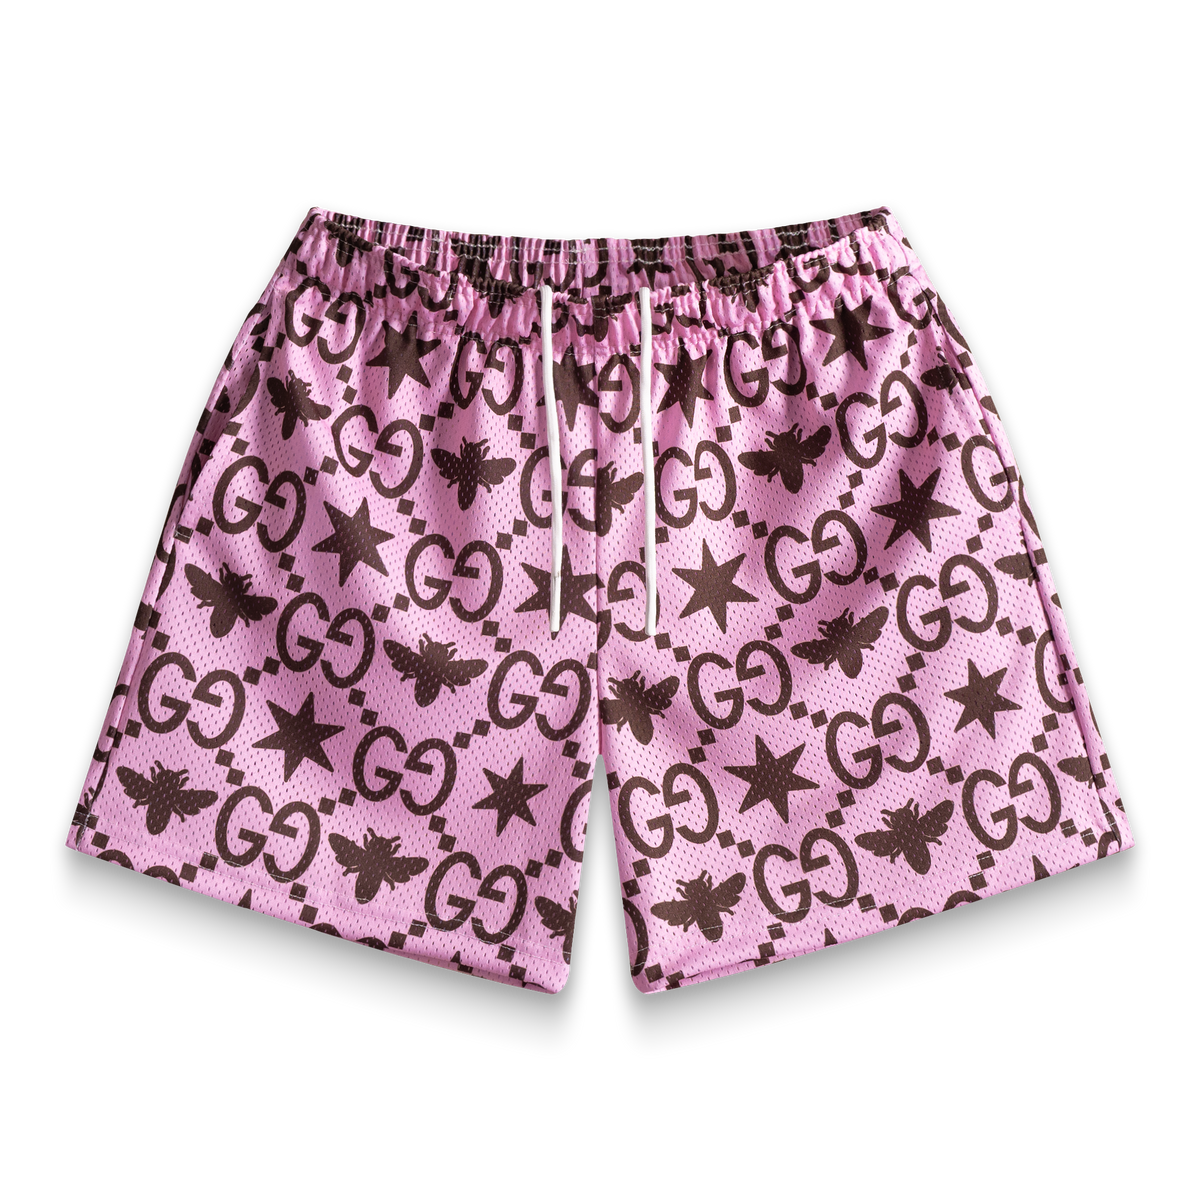 Venice Mega G Pink Shorts